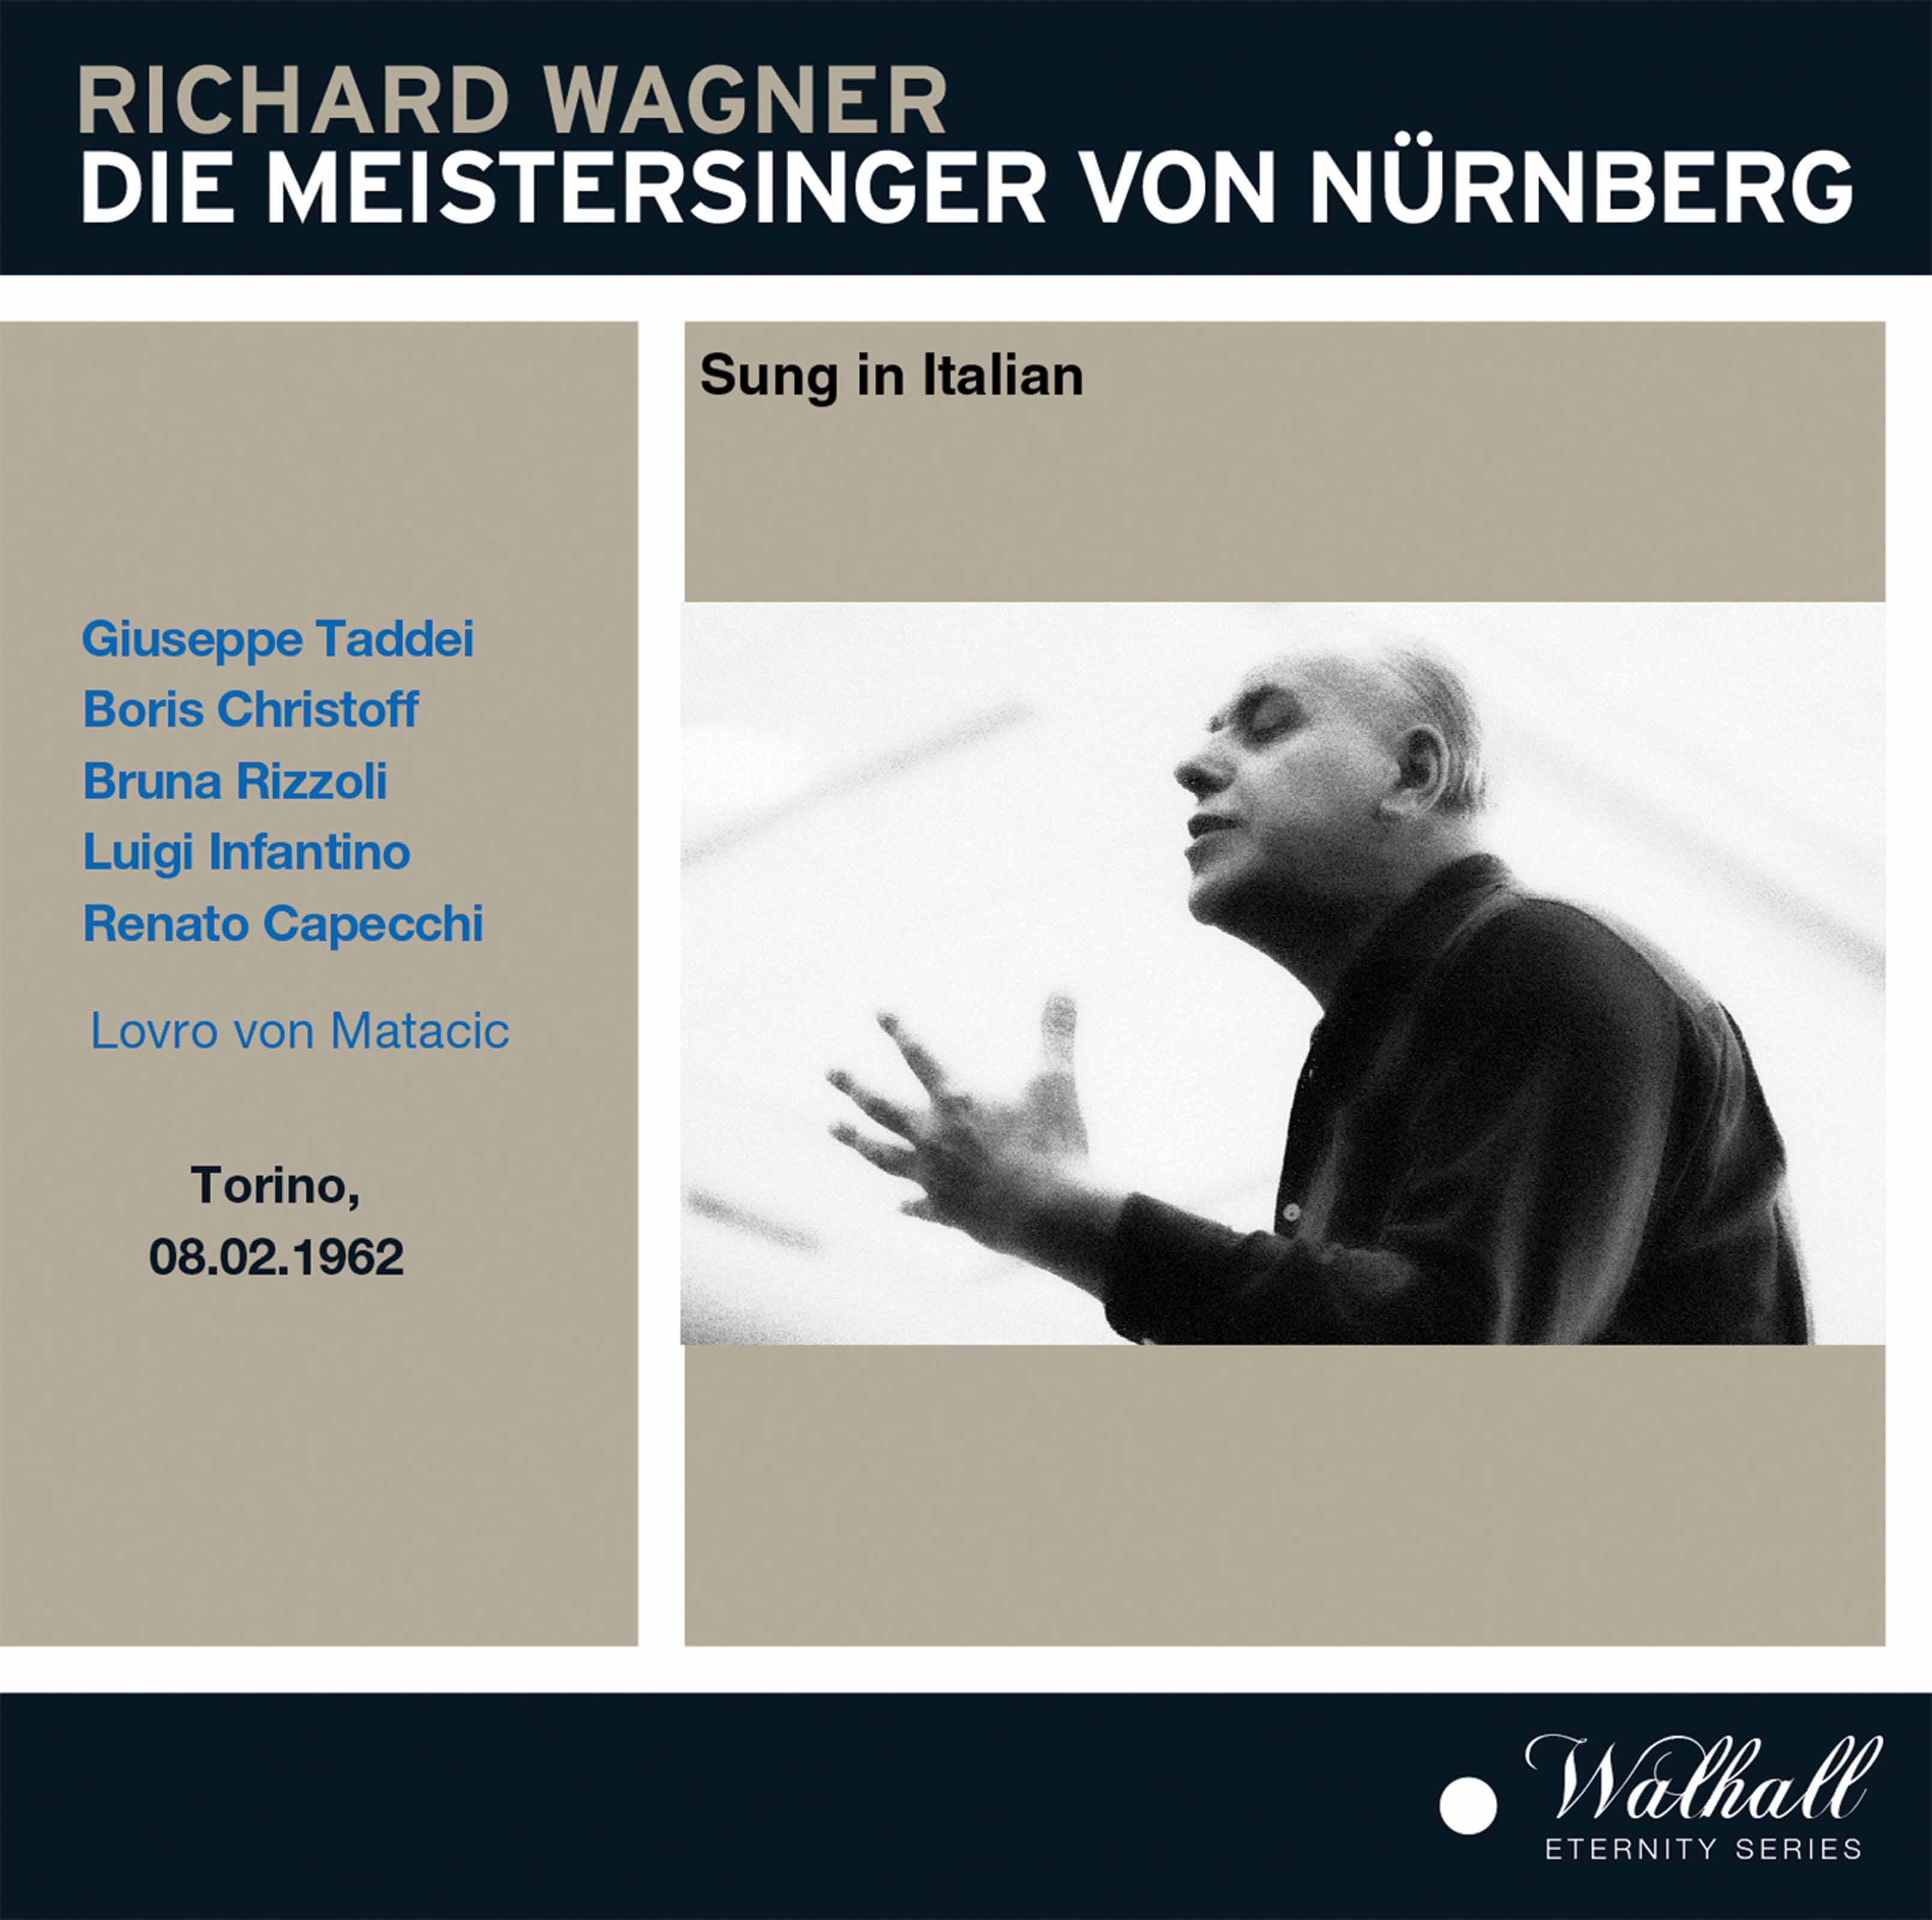 Orchestra Di Torino Della Rai - Die Meistersinger von Nürnberg:Wohl, Meister! Zur Tagesordnung kehrt! (Si torni all'ordine del di)